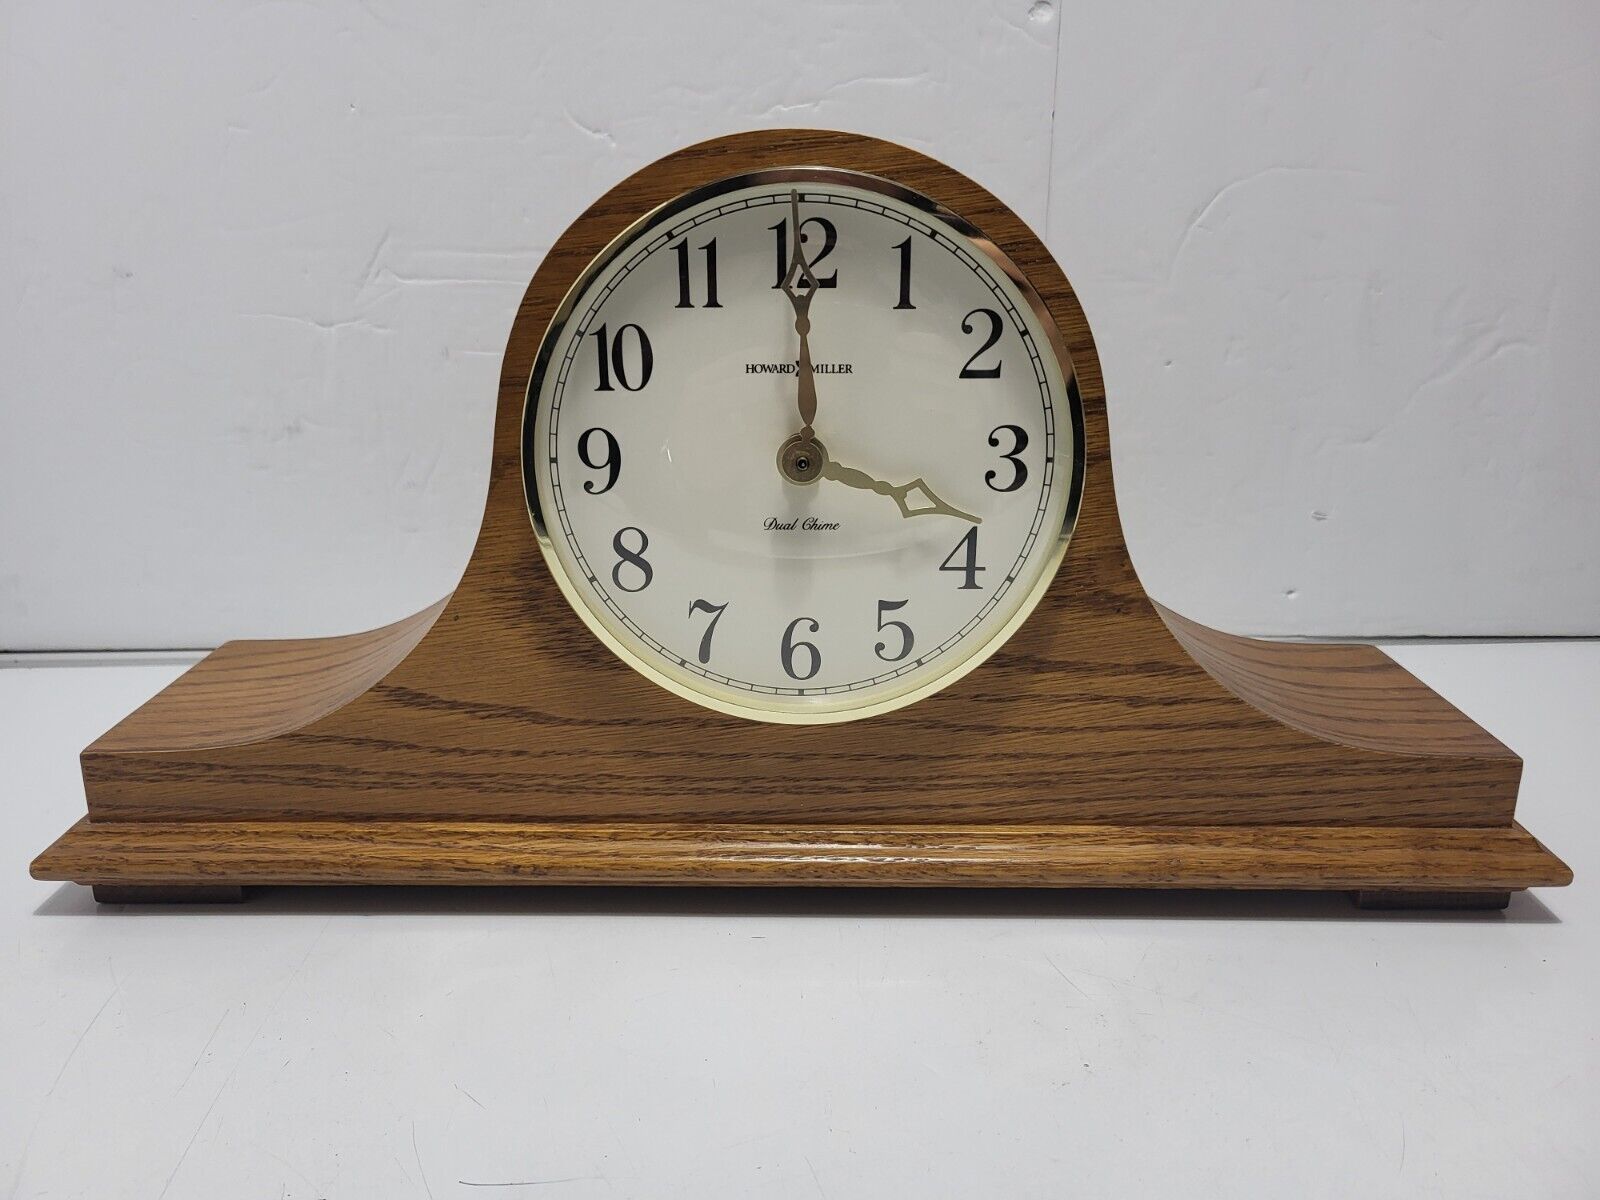 Howard Miller Vintage Clock 630-118 Chime Doesnt Work Needs Repair New Movement